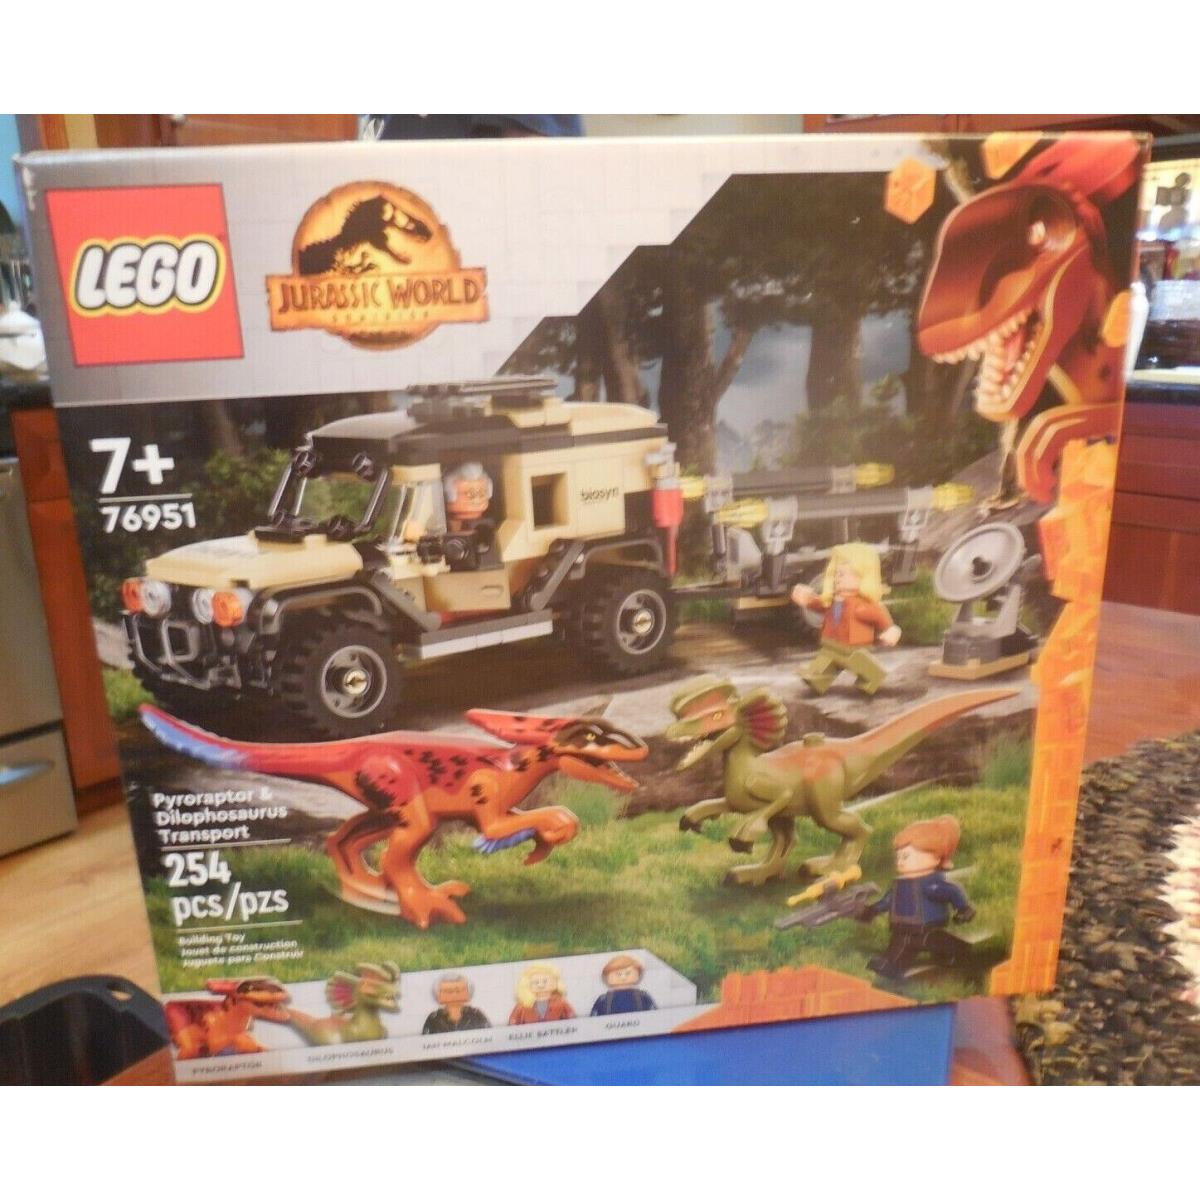 Lego 76951 Pyroraptor Dilophosaurus Transport